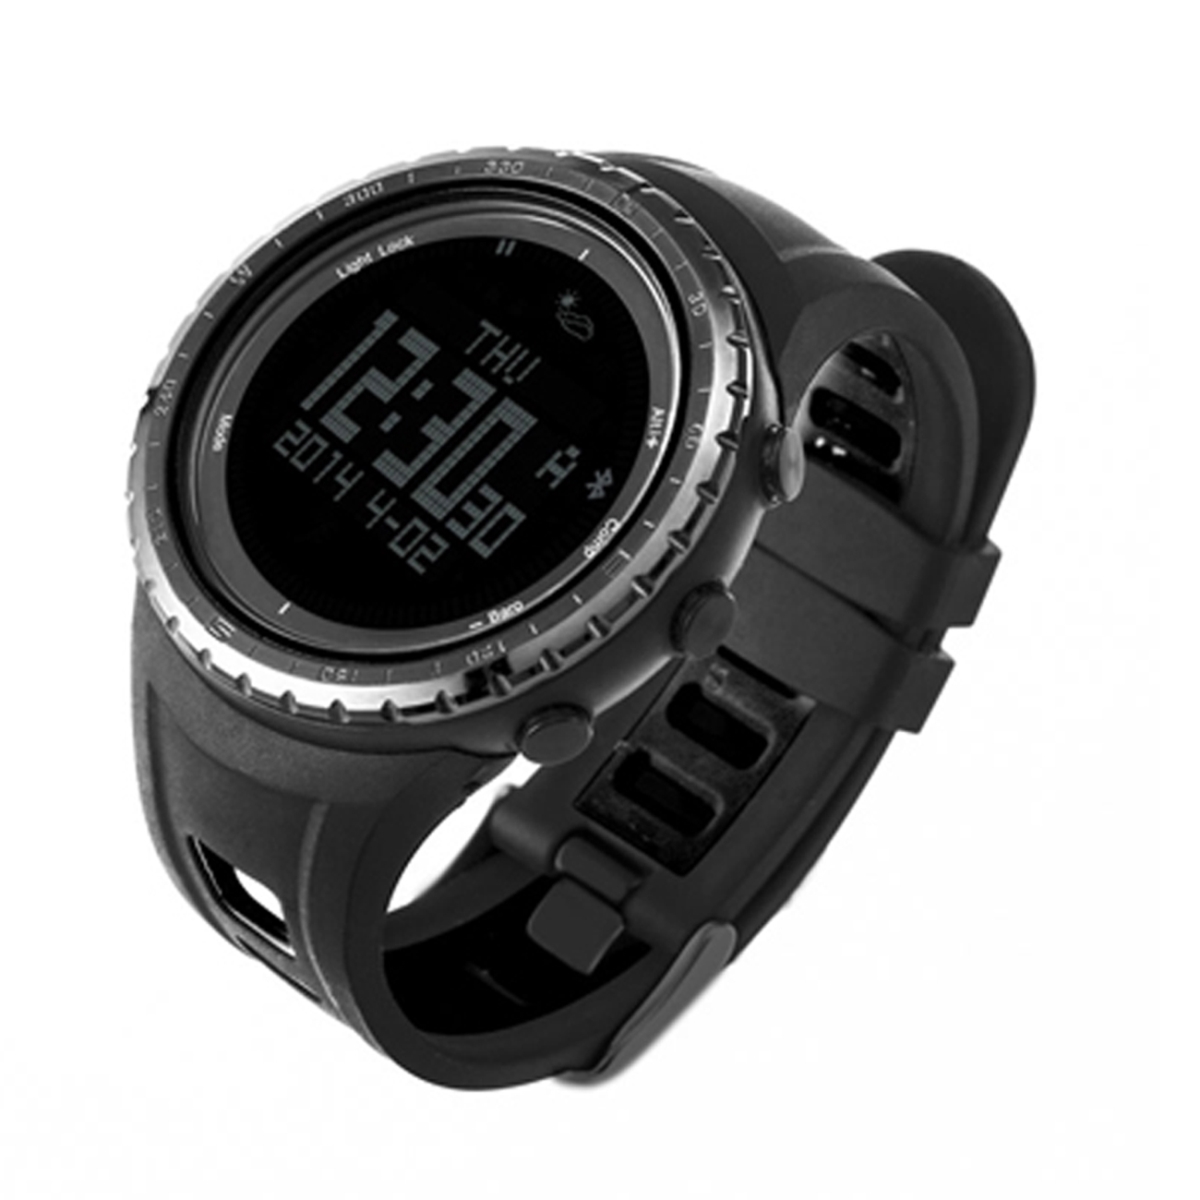 Sunroad FR803 Fishing Barometer Smart Watch Black